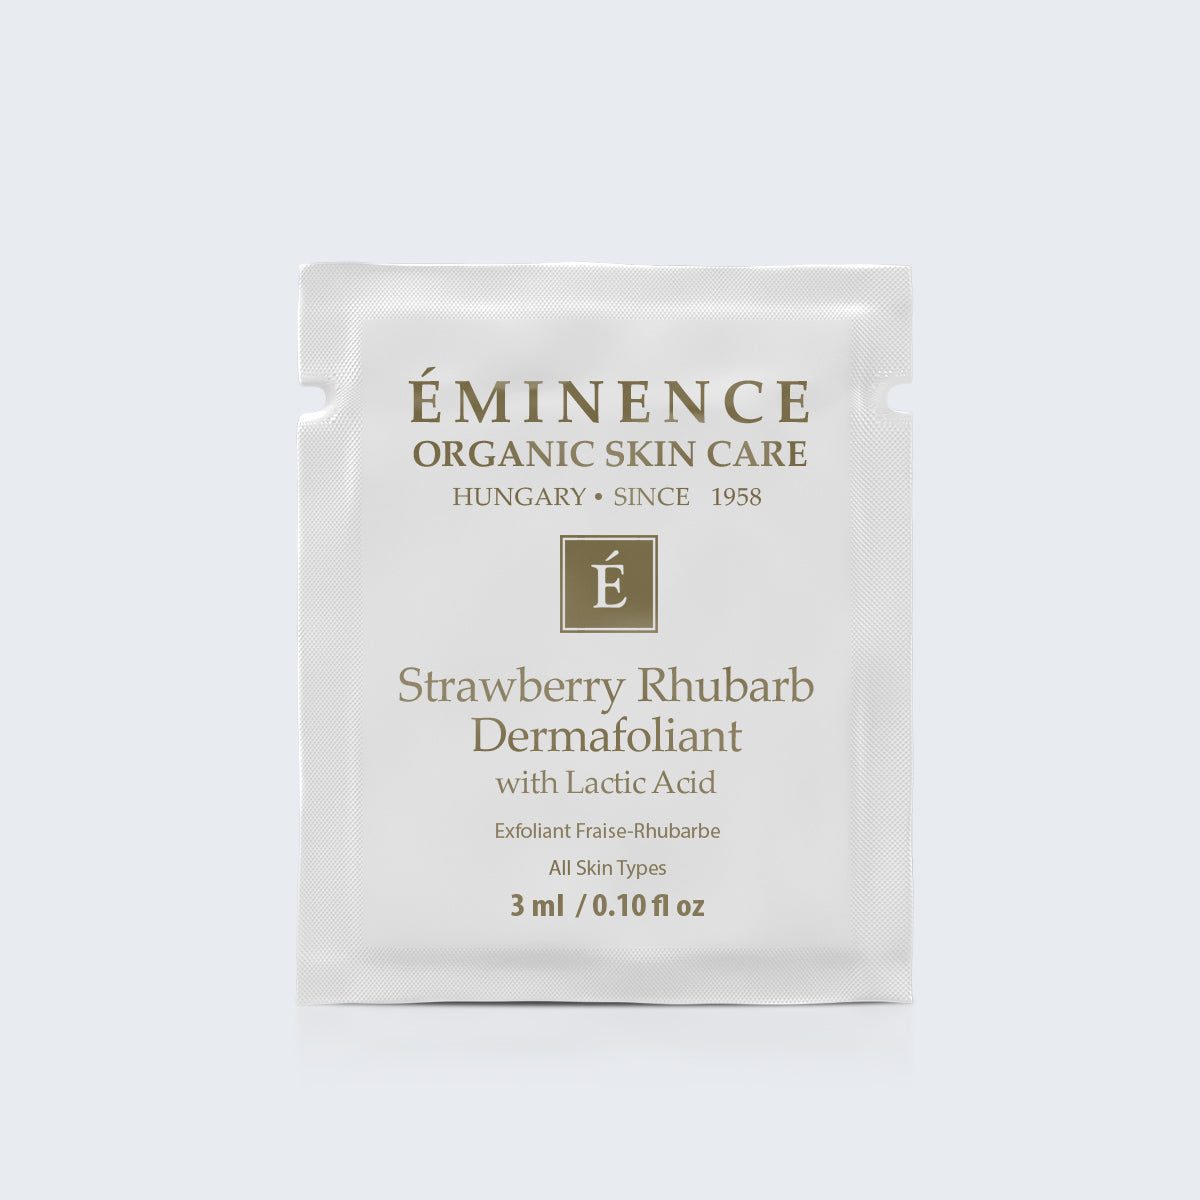 Eminence Organics Strawberry Rhubarb Dermafoliant Card Sample